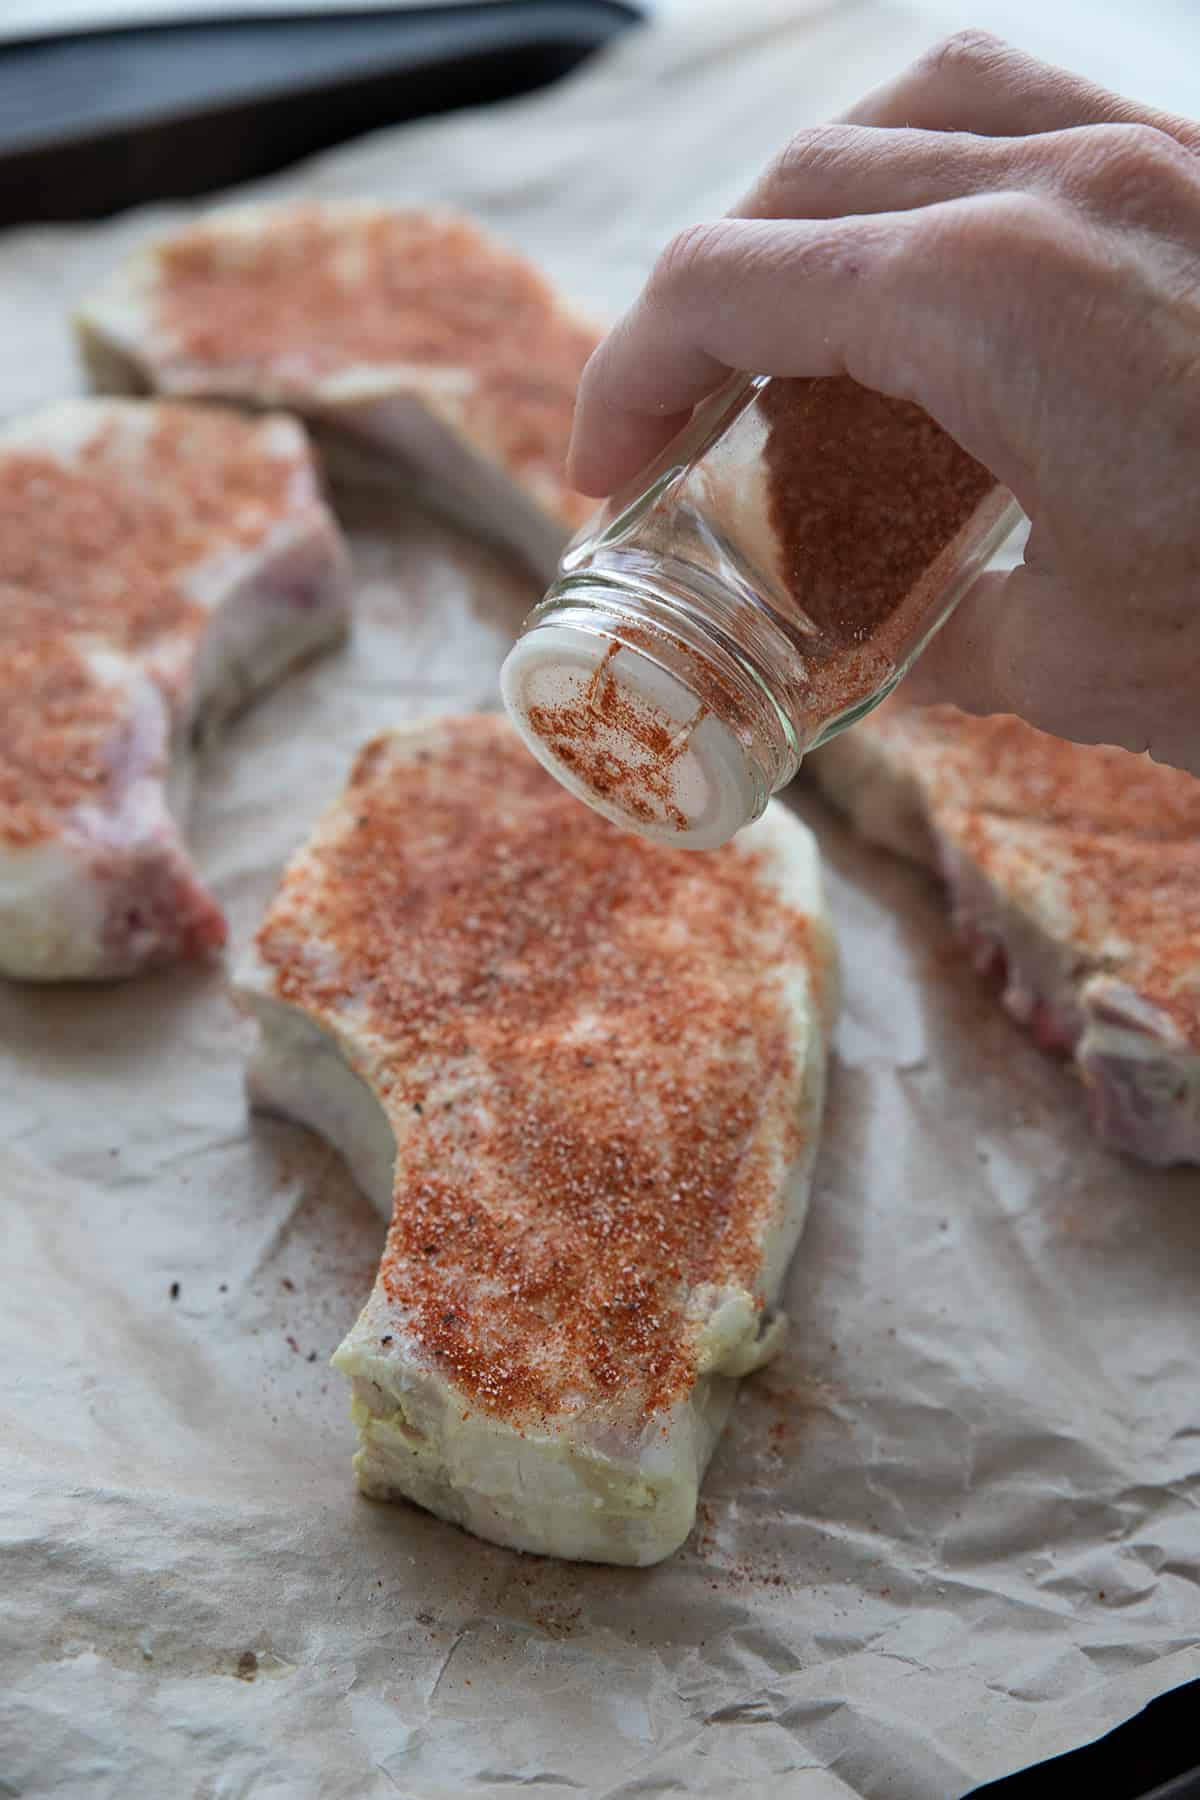 Sprinkle the pork chops with the seasoning.